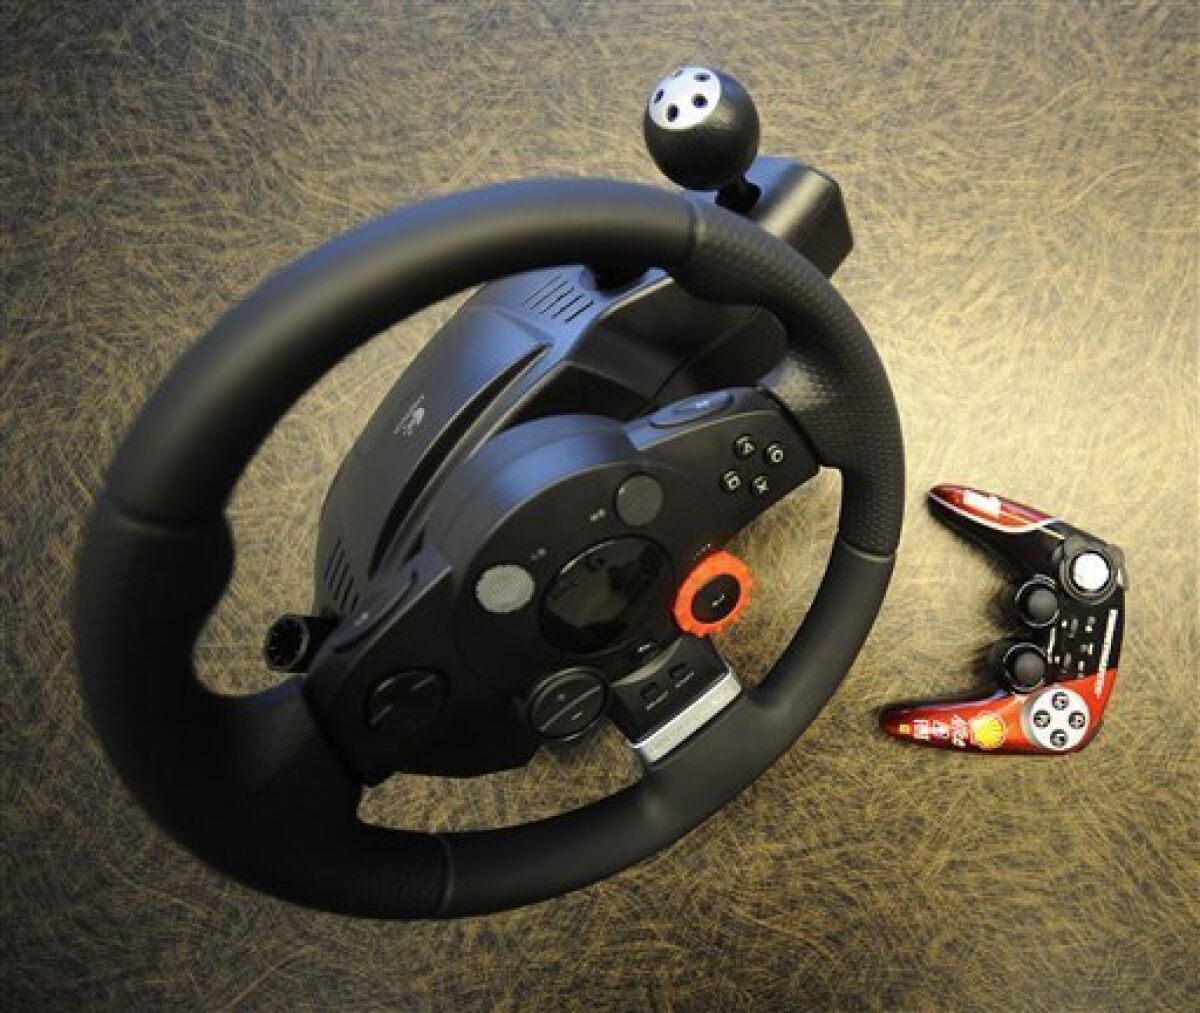 Bær Grav Integral Review: Best accessories for driving sim games - The San Diego Union-Tribune